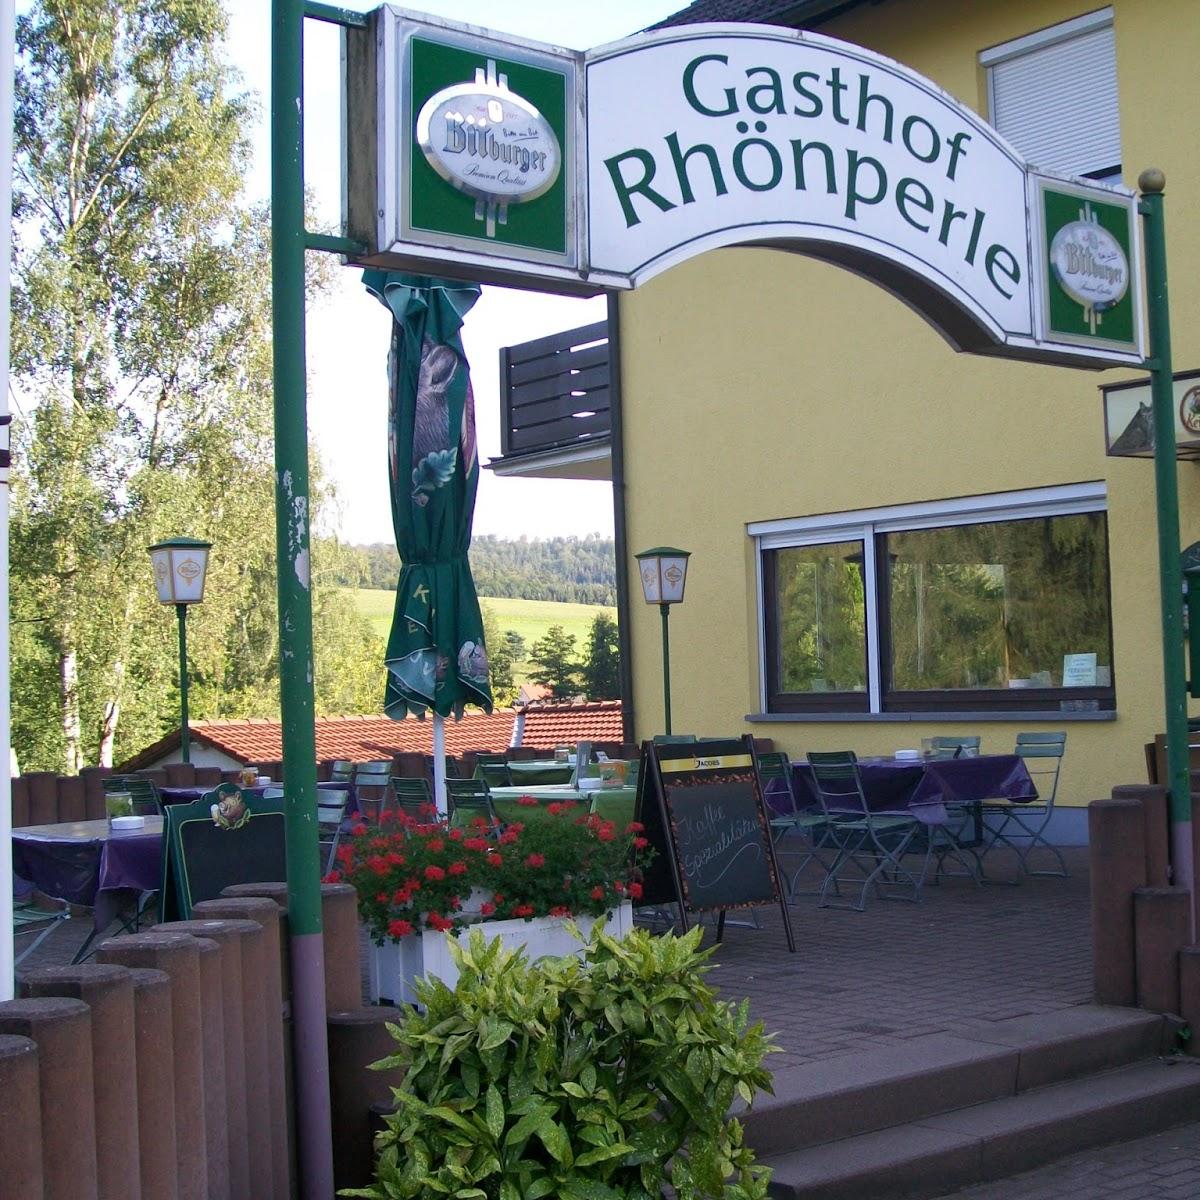 Restaurant "Gasthof & Hotel Rhönperle" in Motten